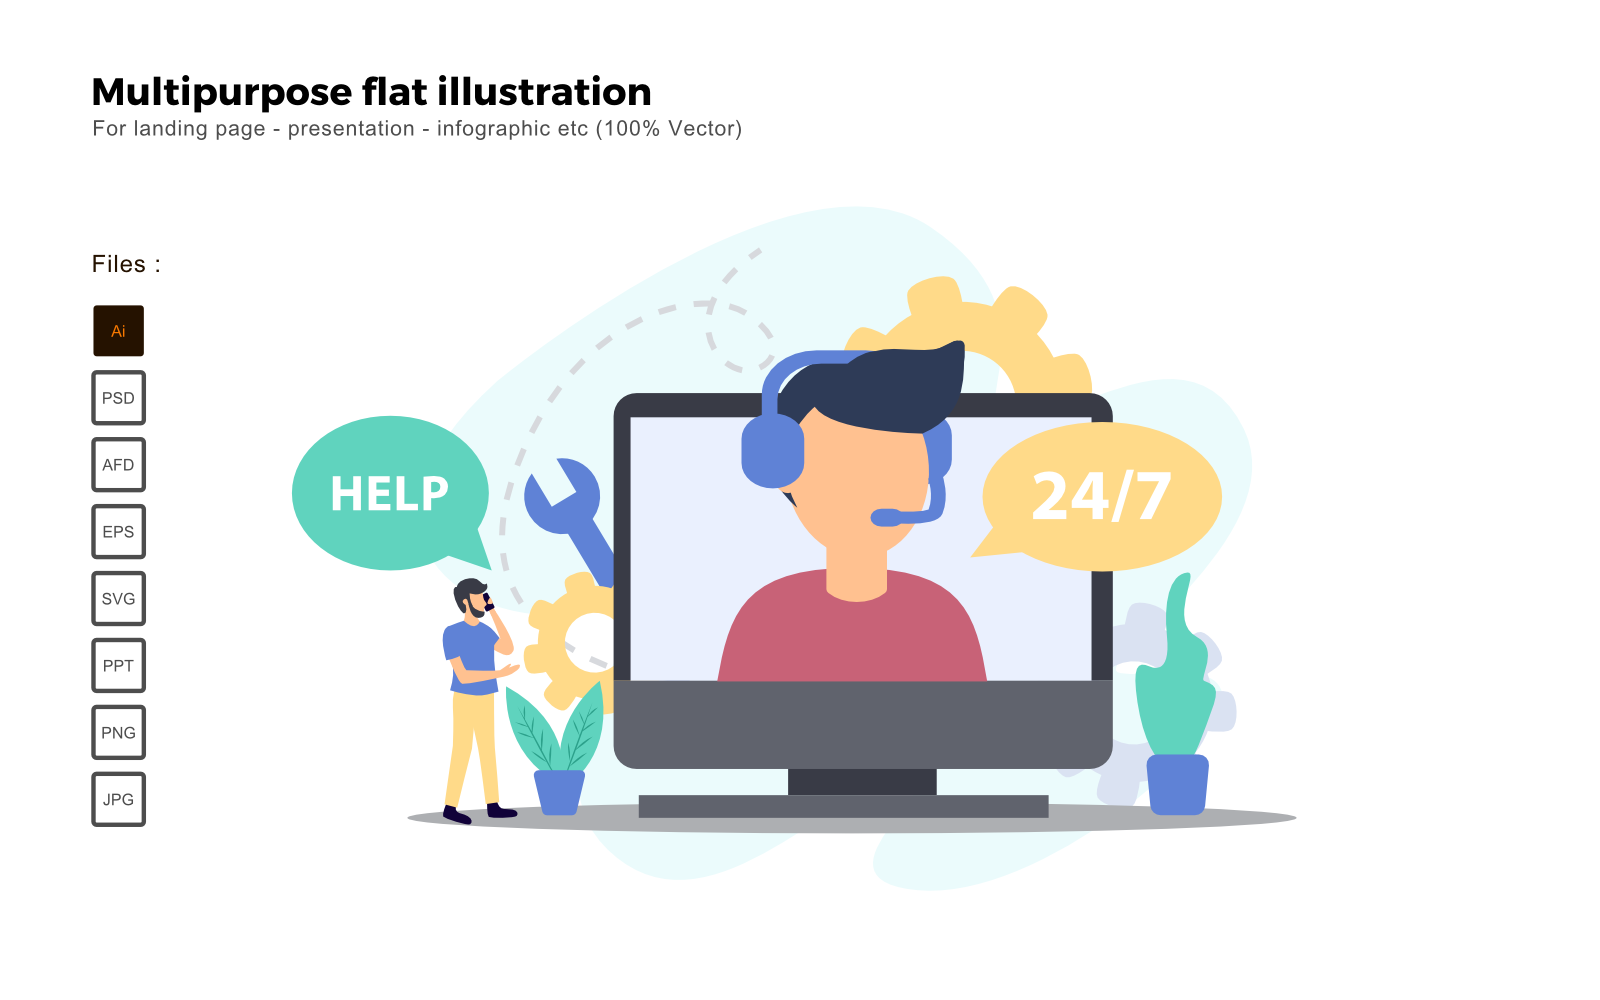 Multipurpose Flat Illustration Customer Service - Vector Image